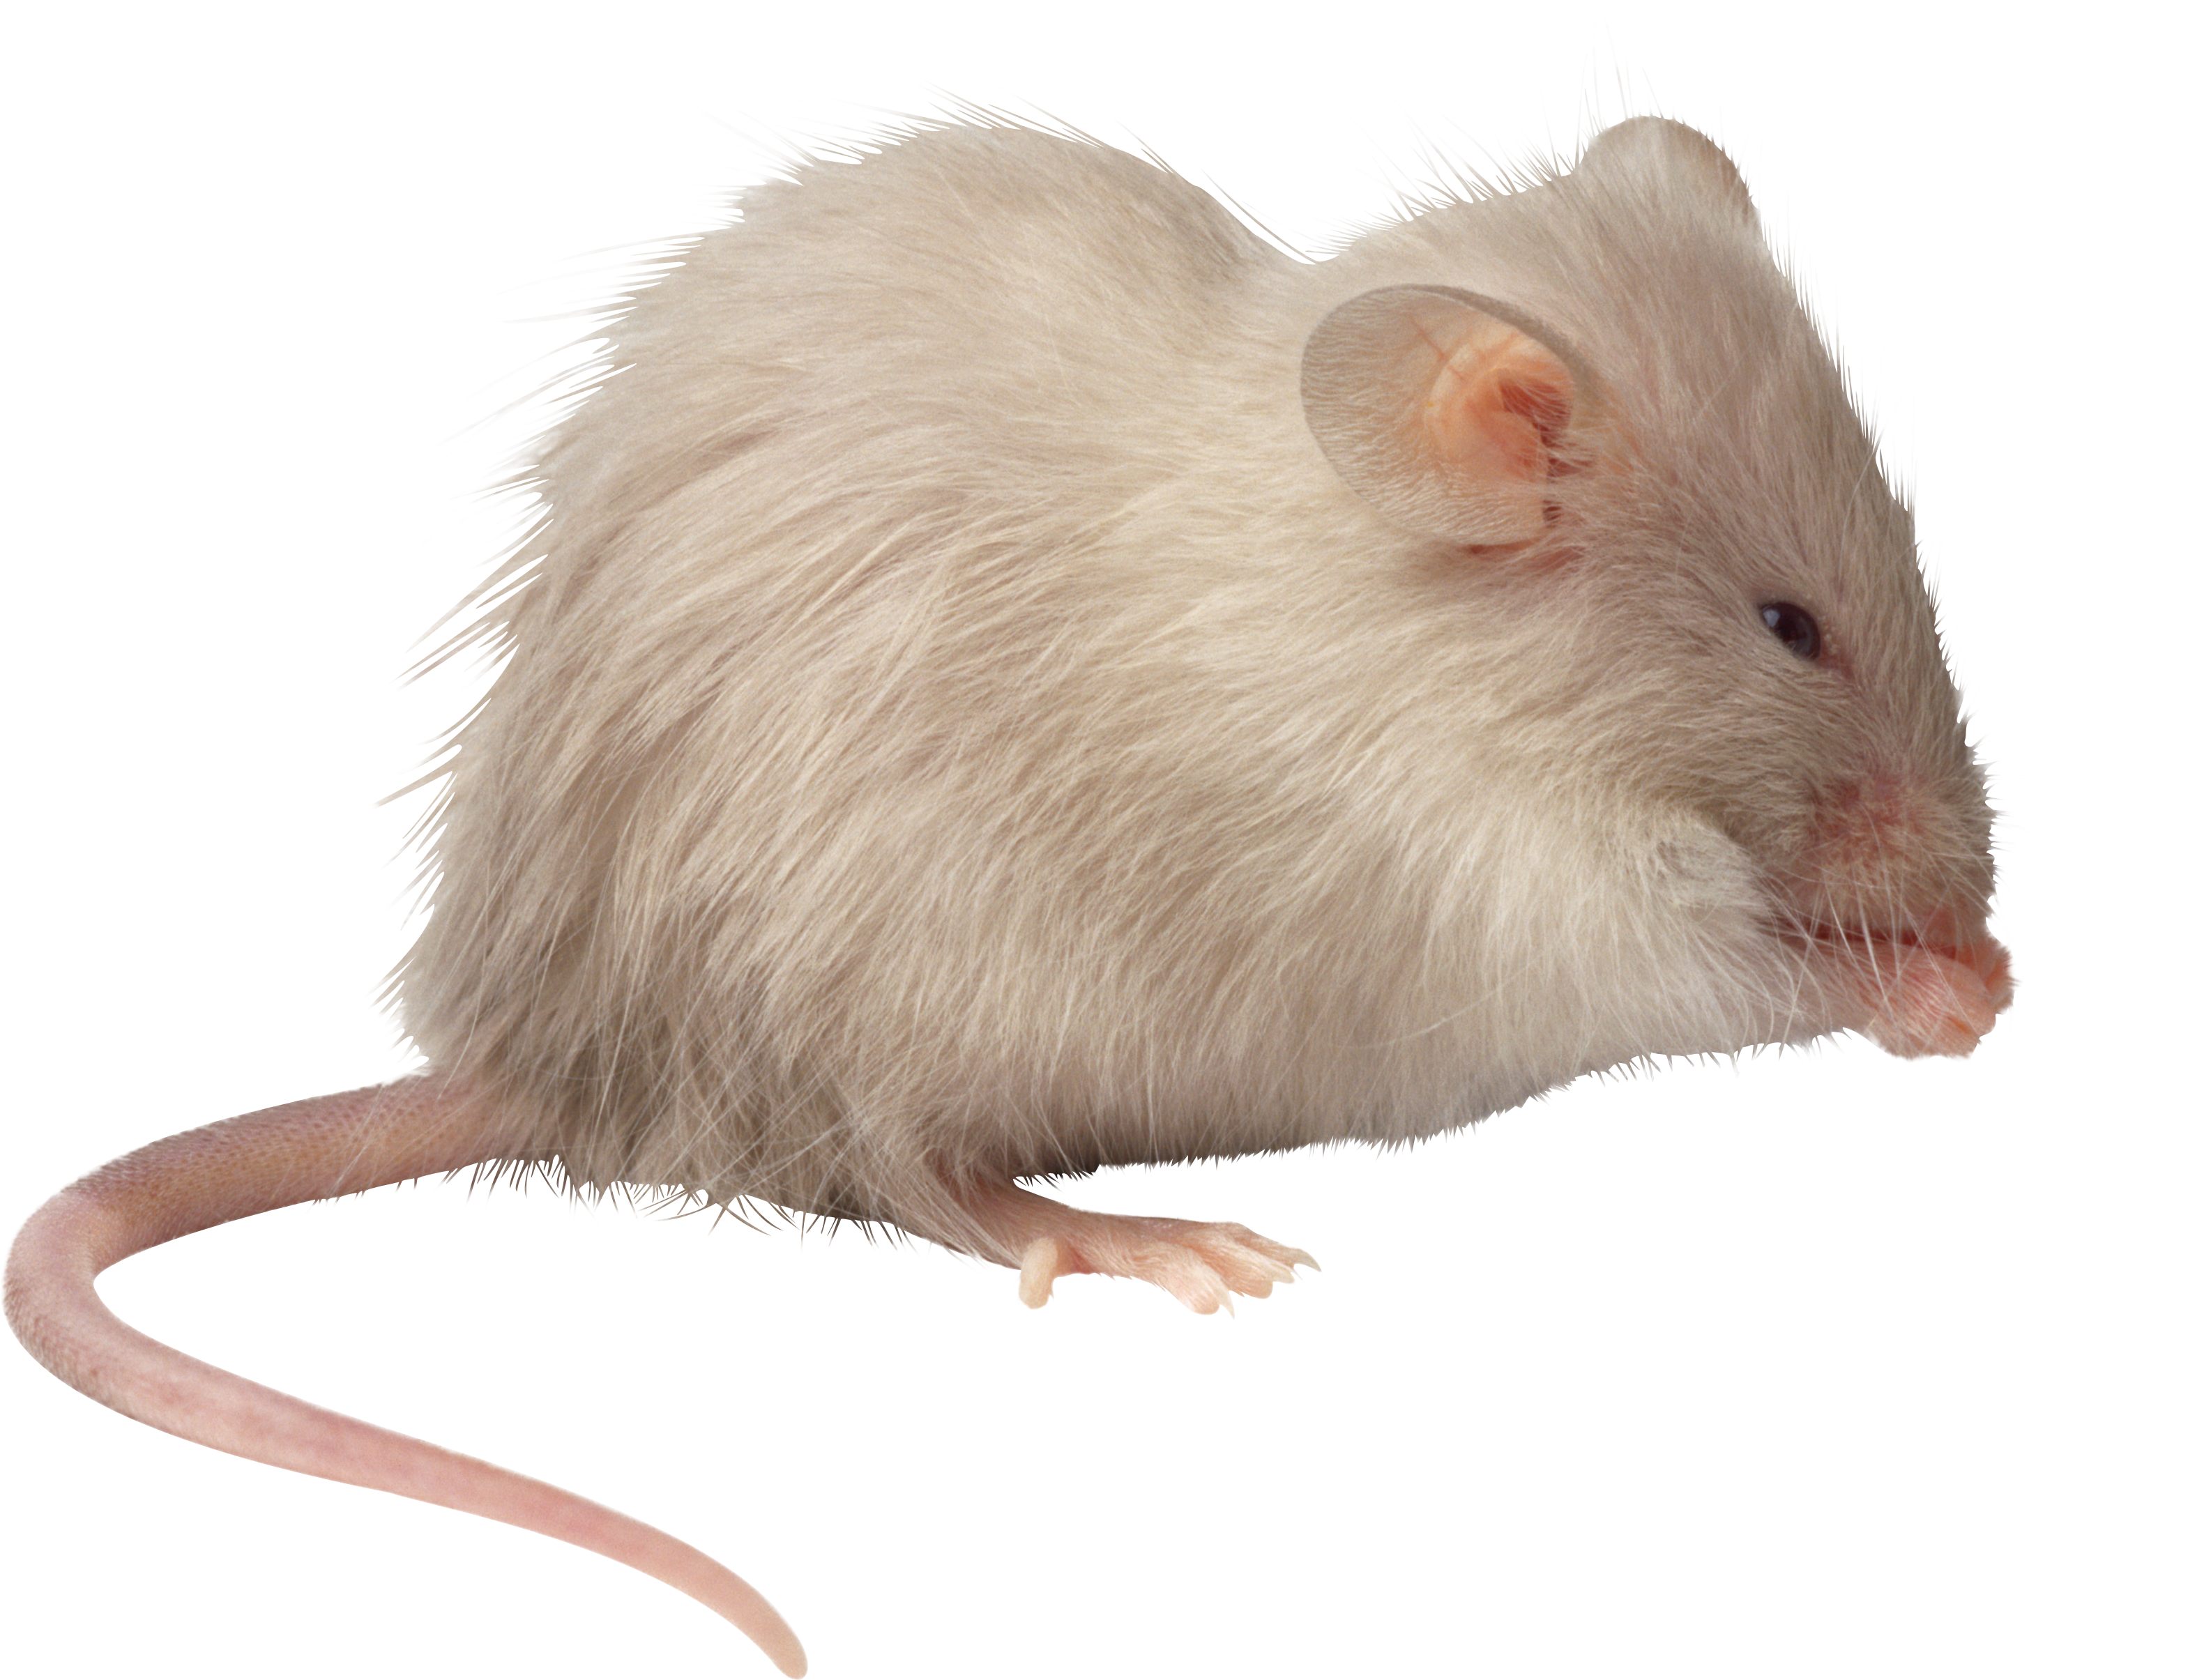 Mouse rat png image. Hamster clipart transparent background